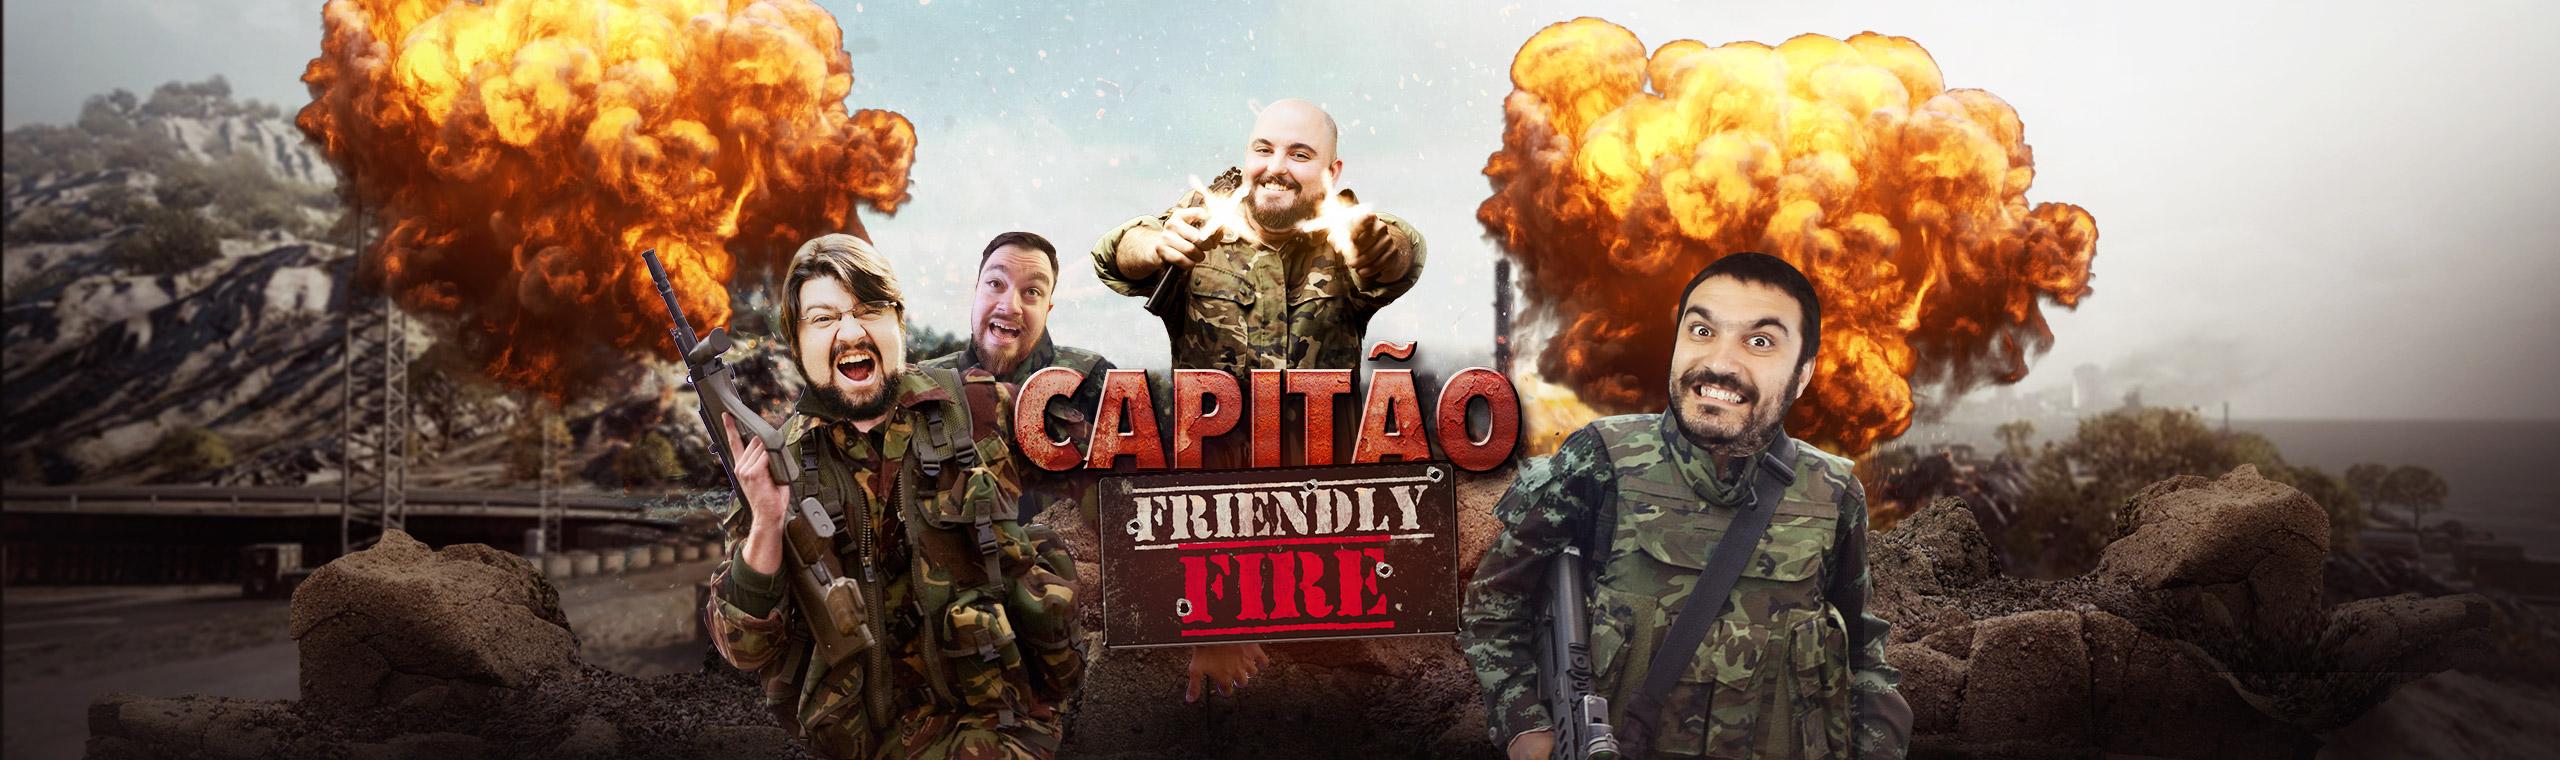 Battlefield 4 - Capitão Friendly Fire